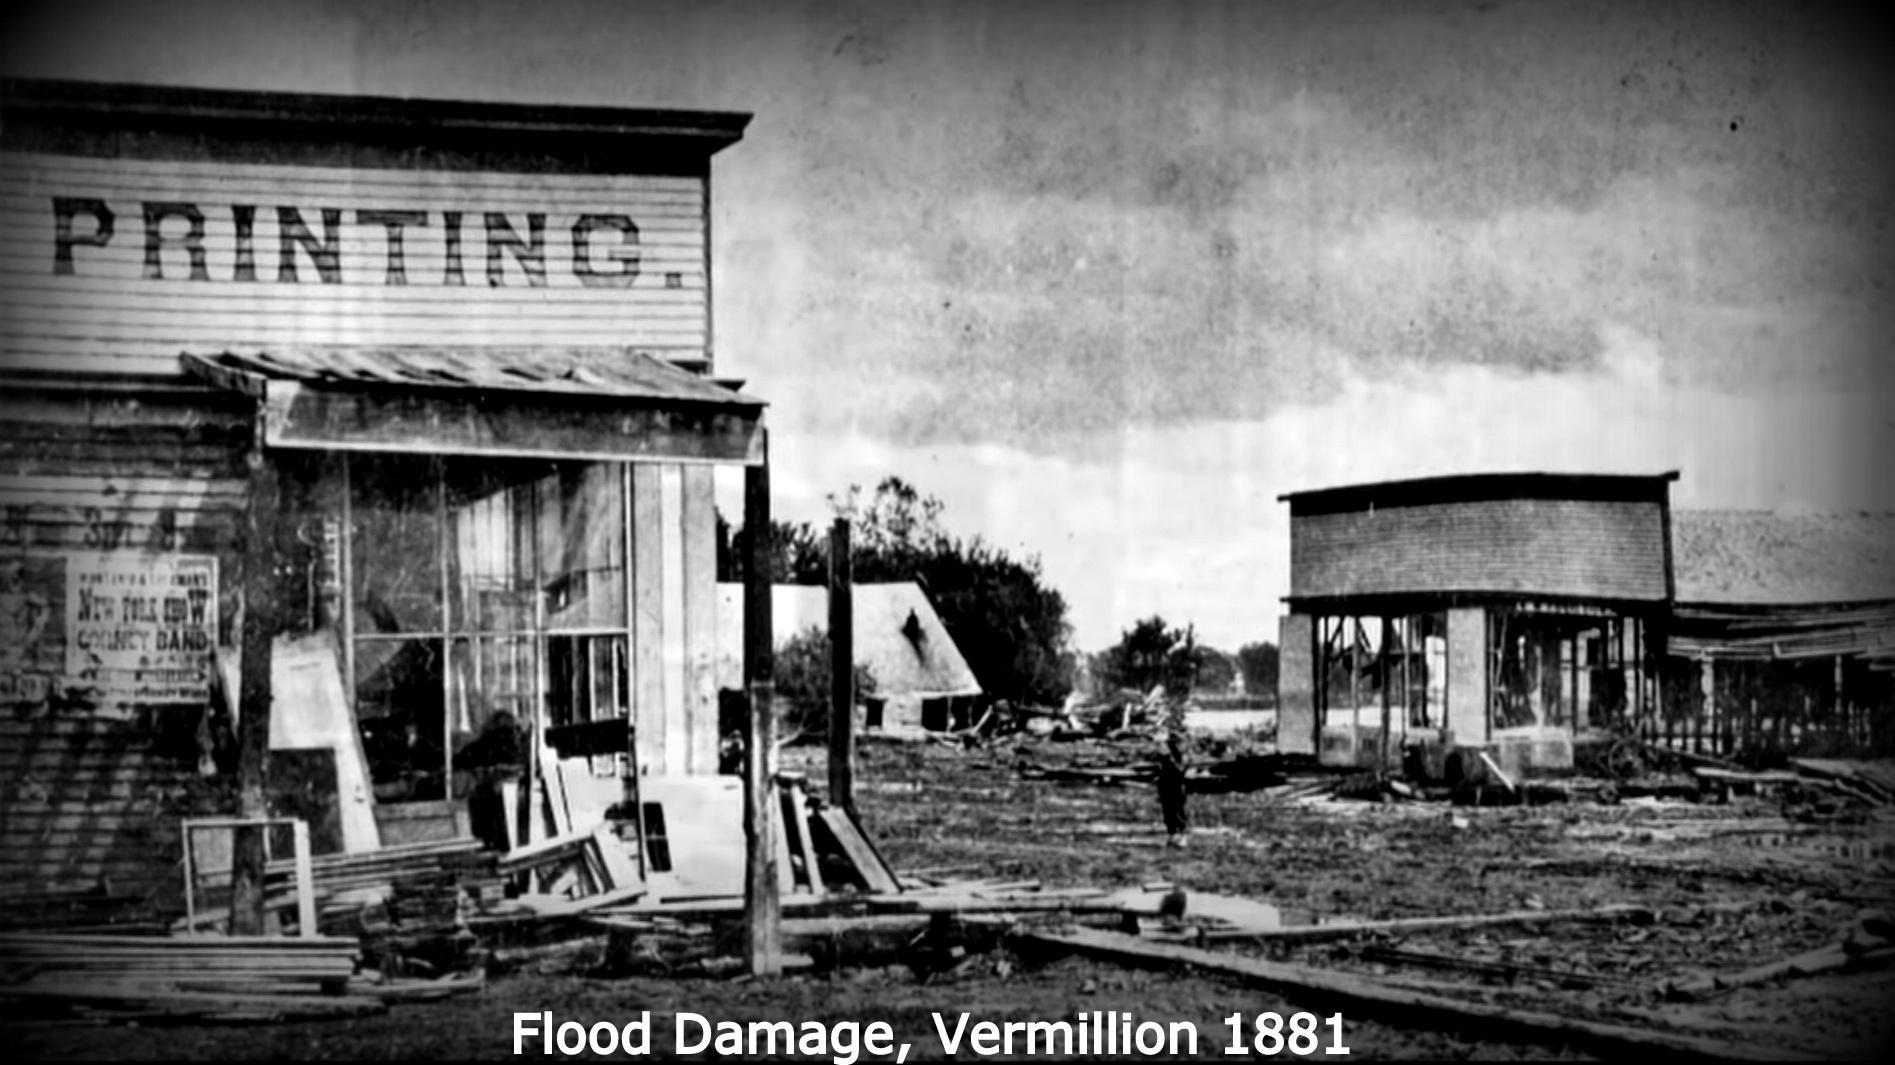 Damaged buildings after the 1881 flood in Vermillion, South Dakota. 